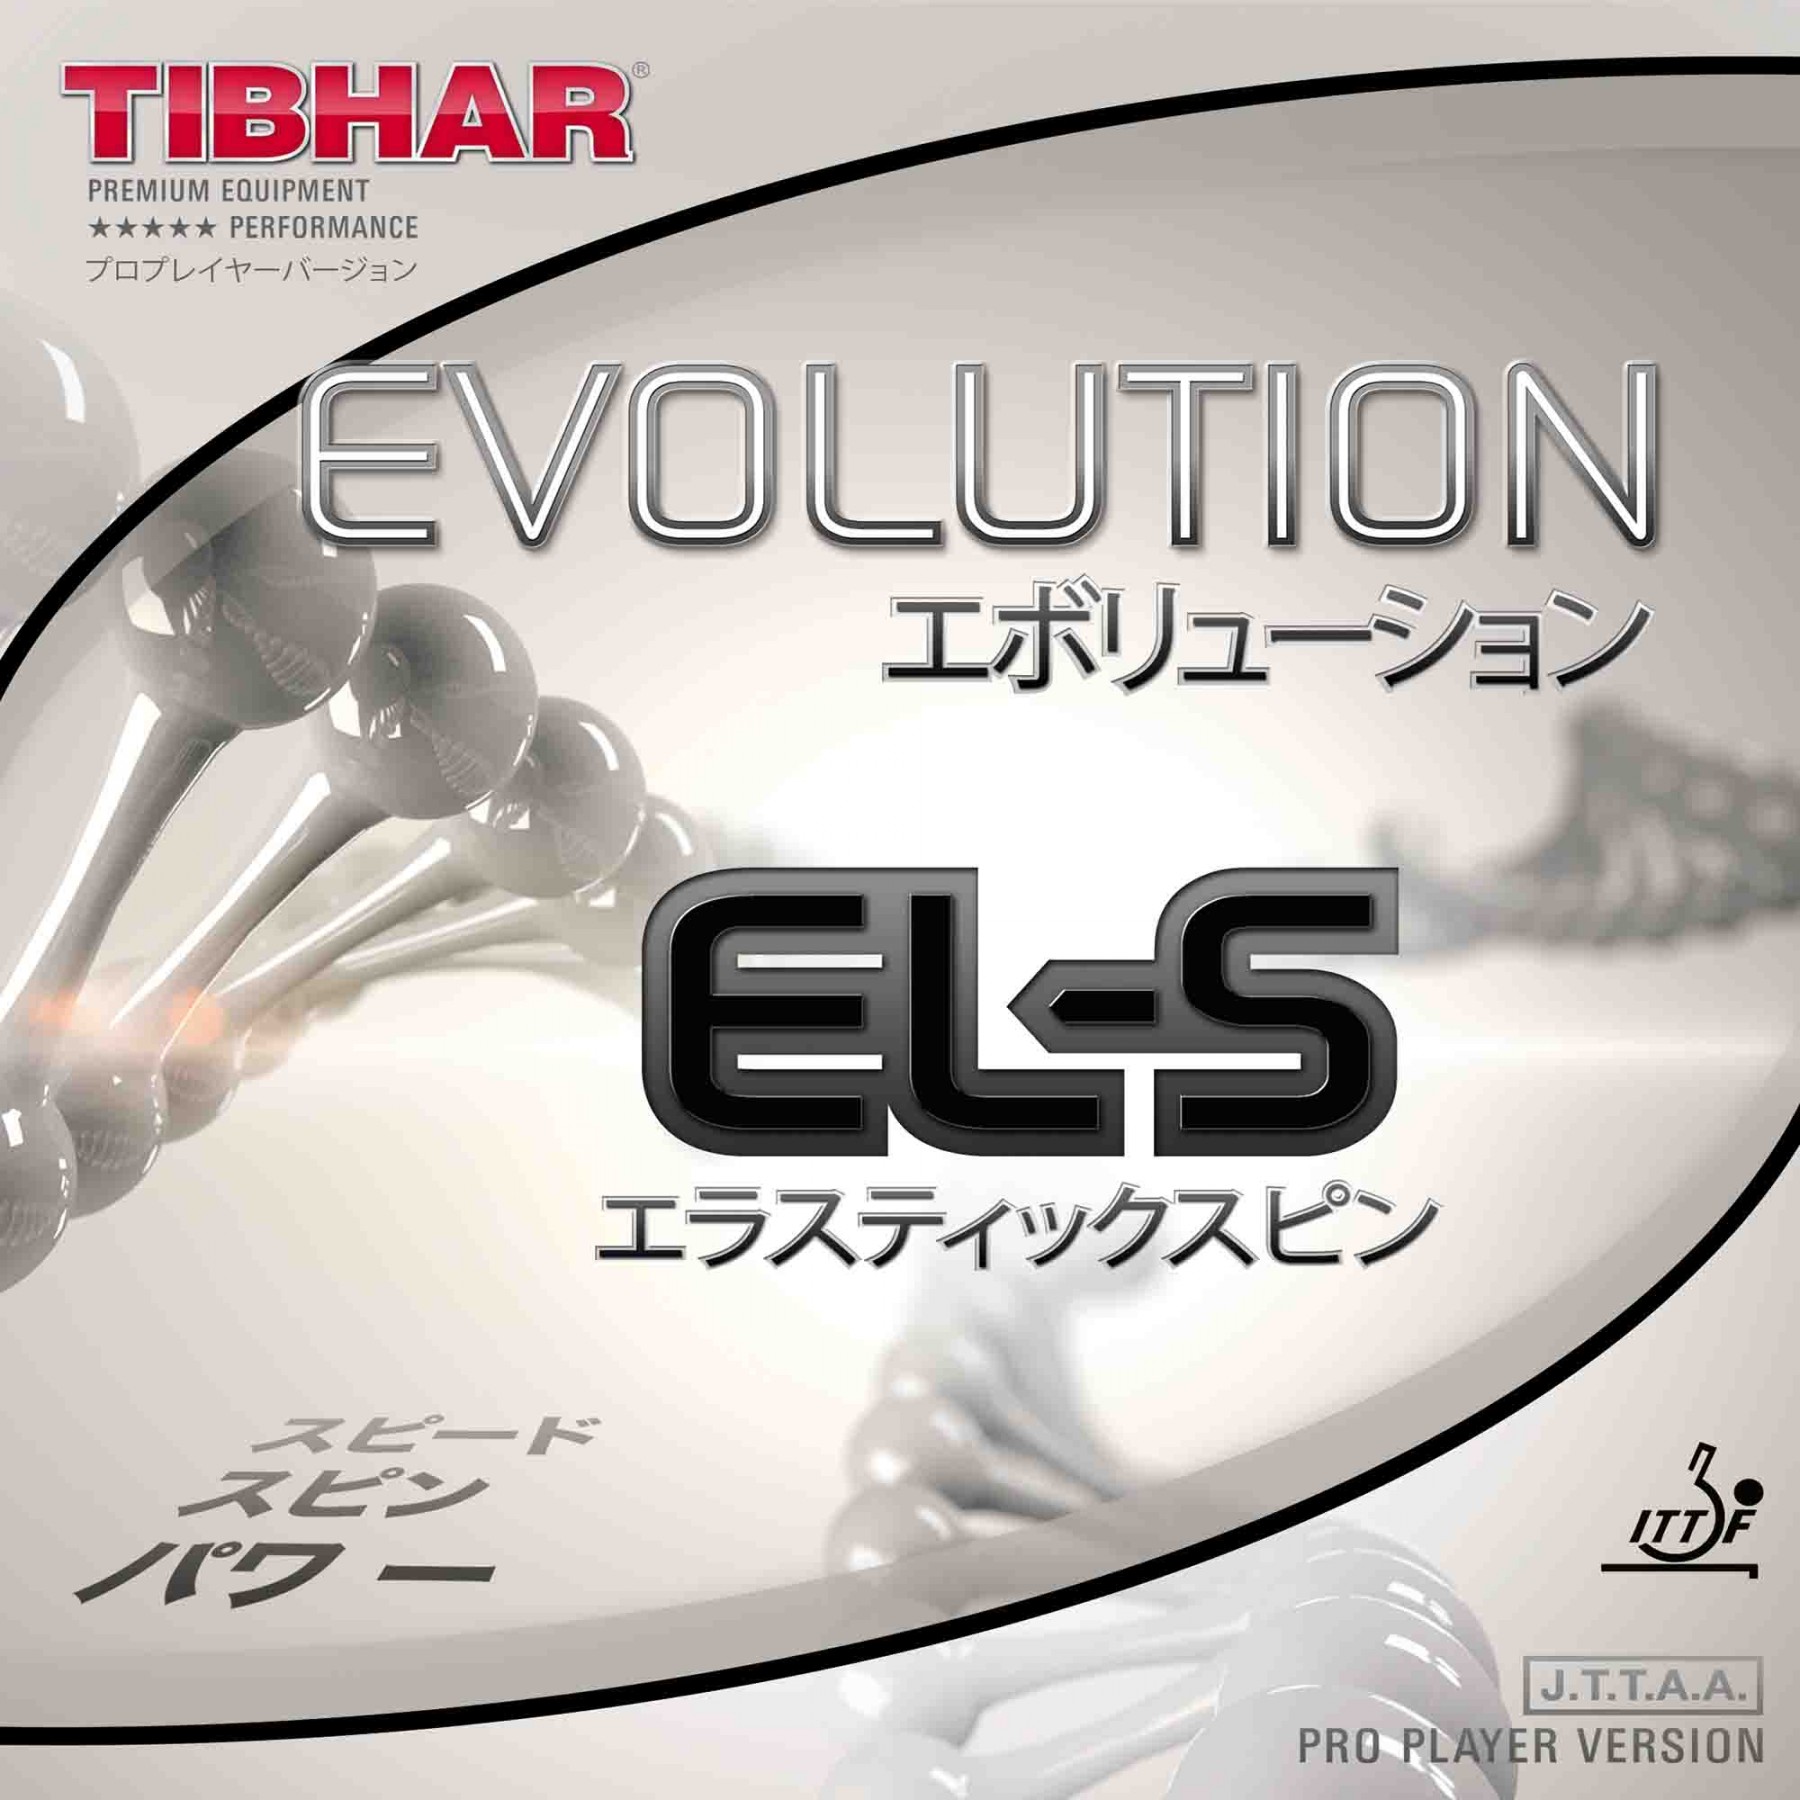 OVP Tibhar Tischtennisbelag Evolution FX-S 1,7mm schwarz  NEU 